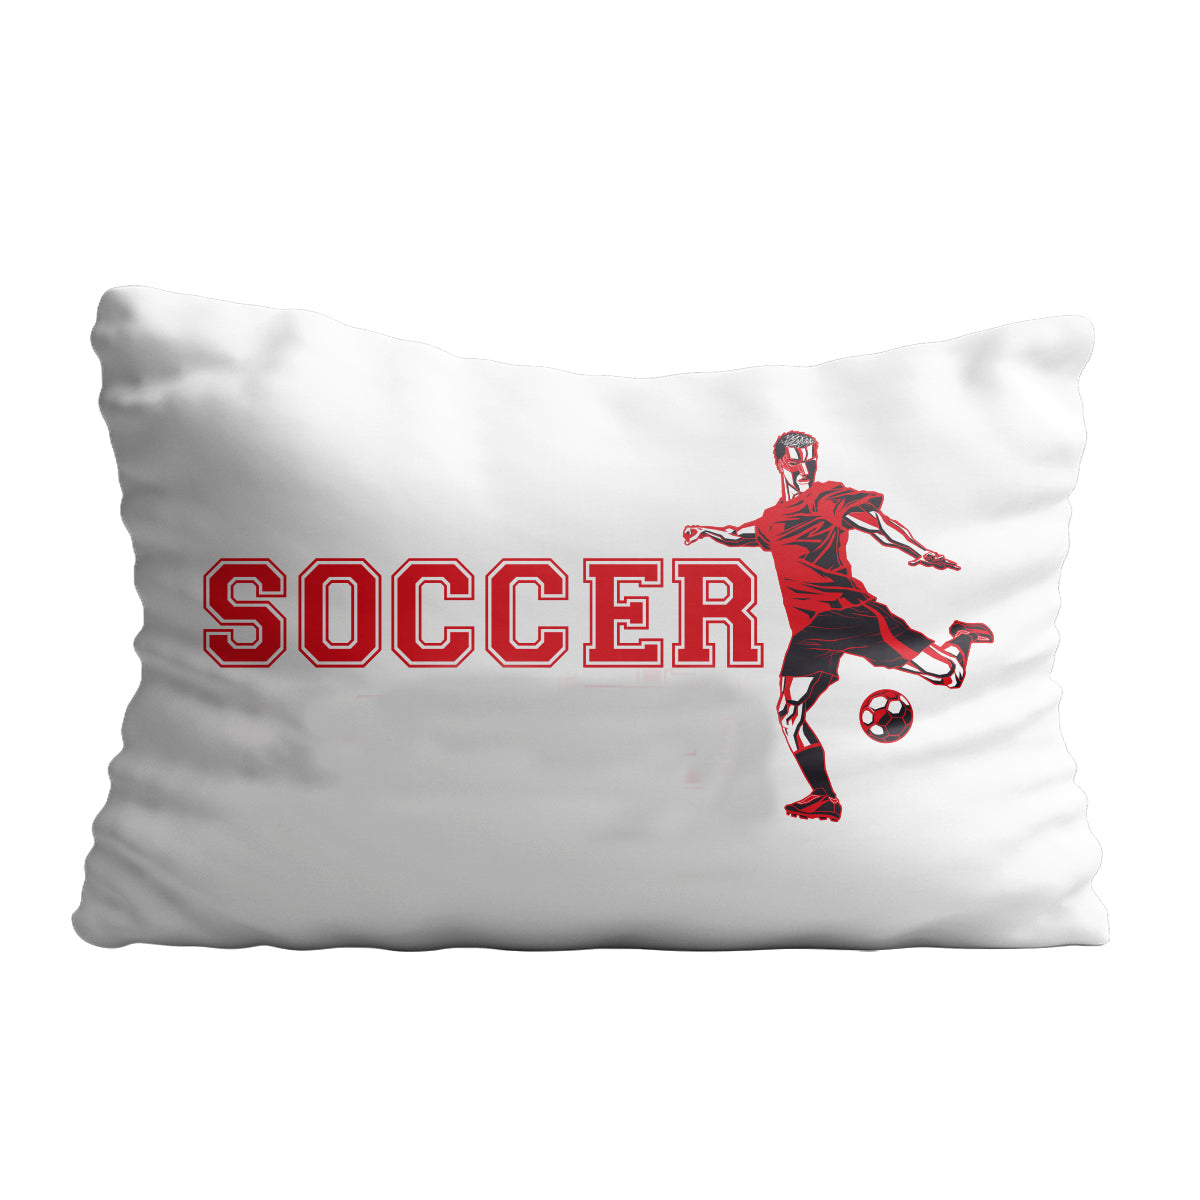 Soccer player name white pillow case - Wimziy&Co.